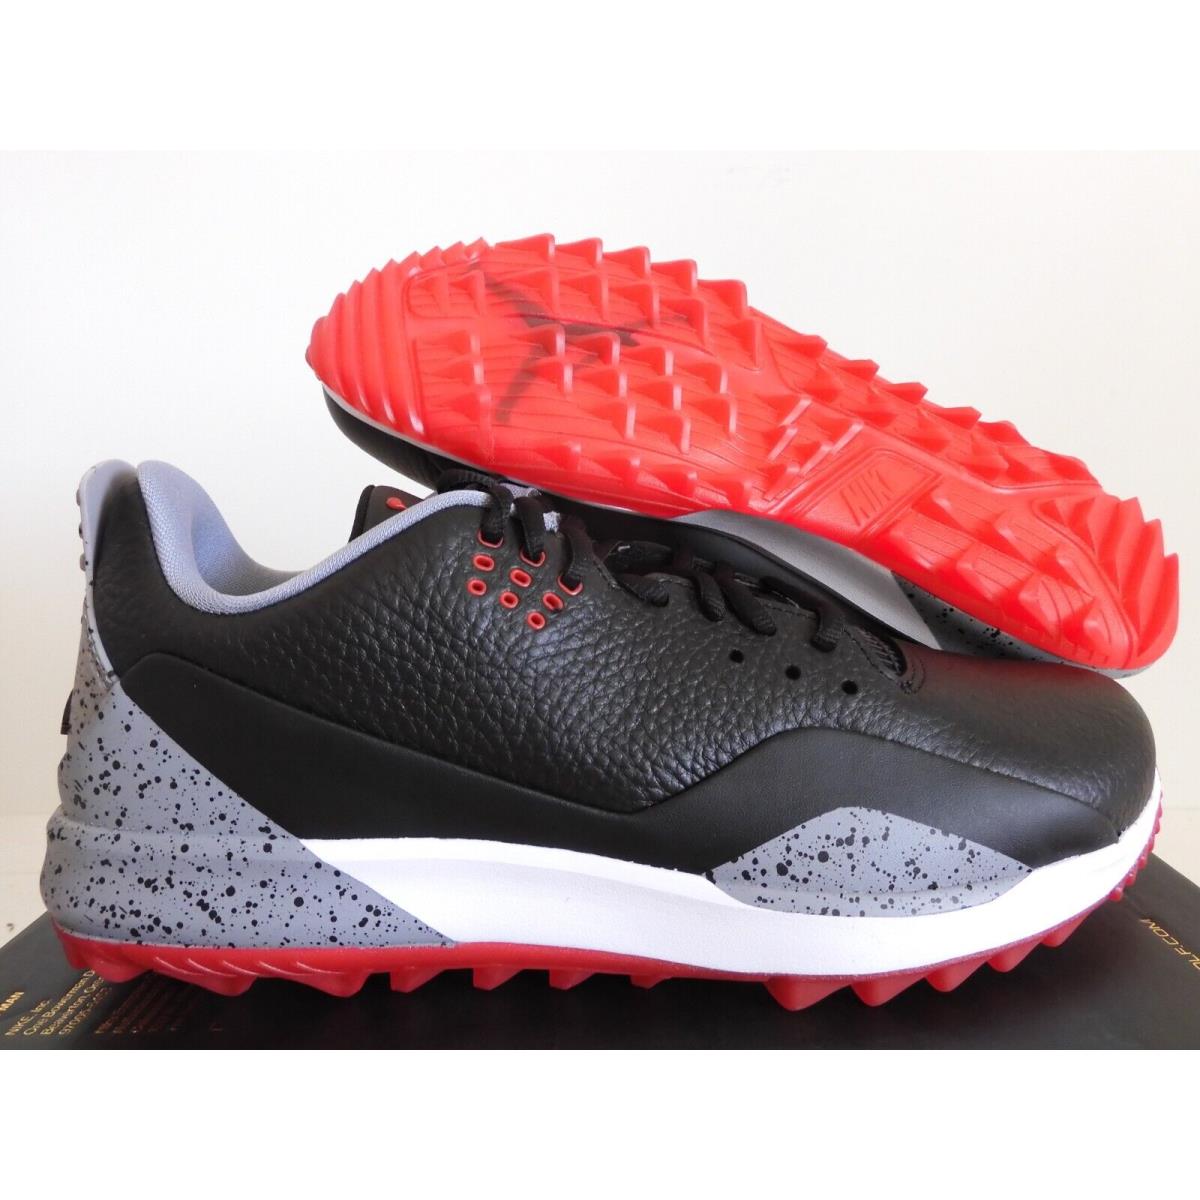 Nike Jordan Adg 3 Golf Cleats Black-fire Red-cement Grey SZ 8.5 CW7242-001